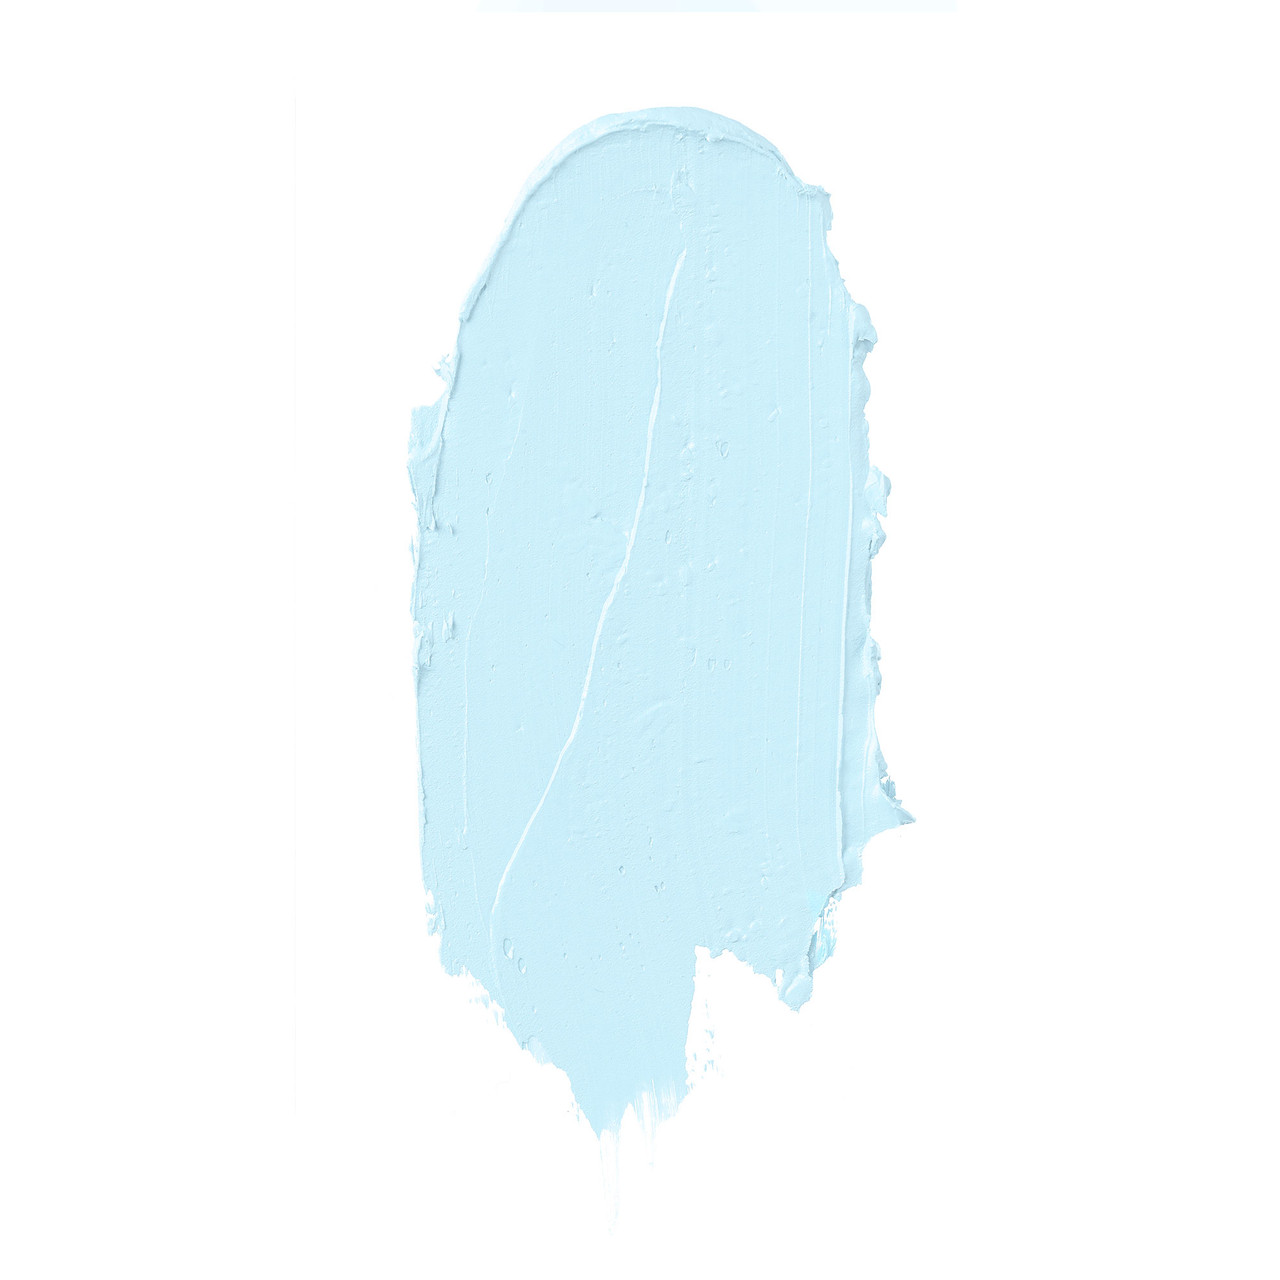 Mehron CreamBlend™ Stick Pastel Blue